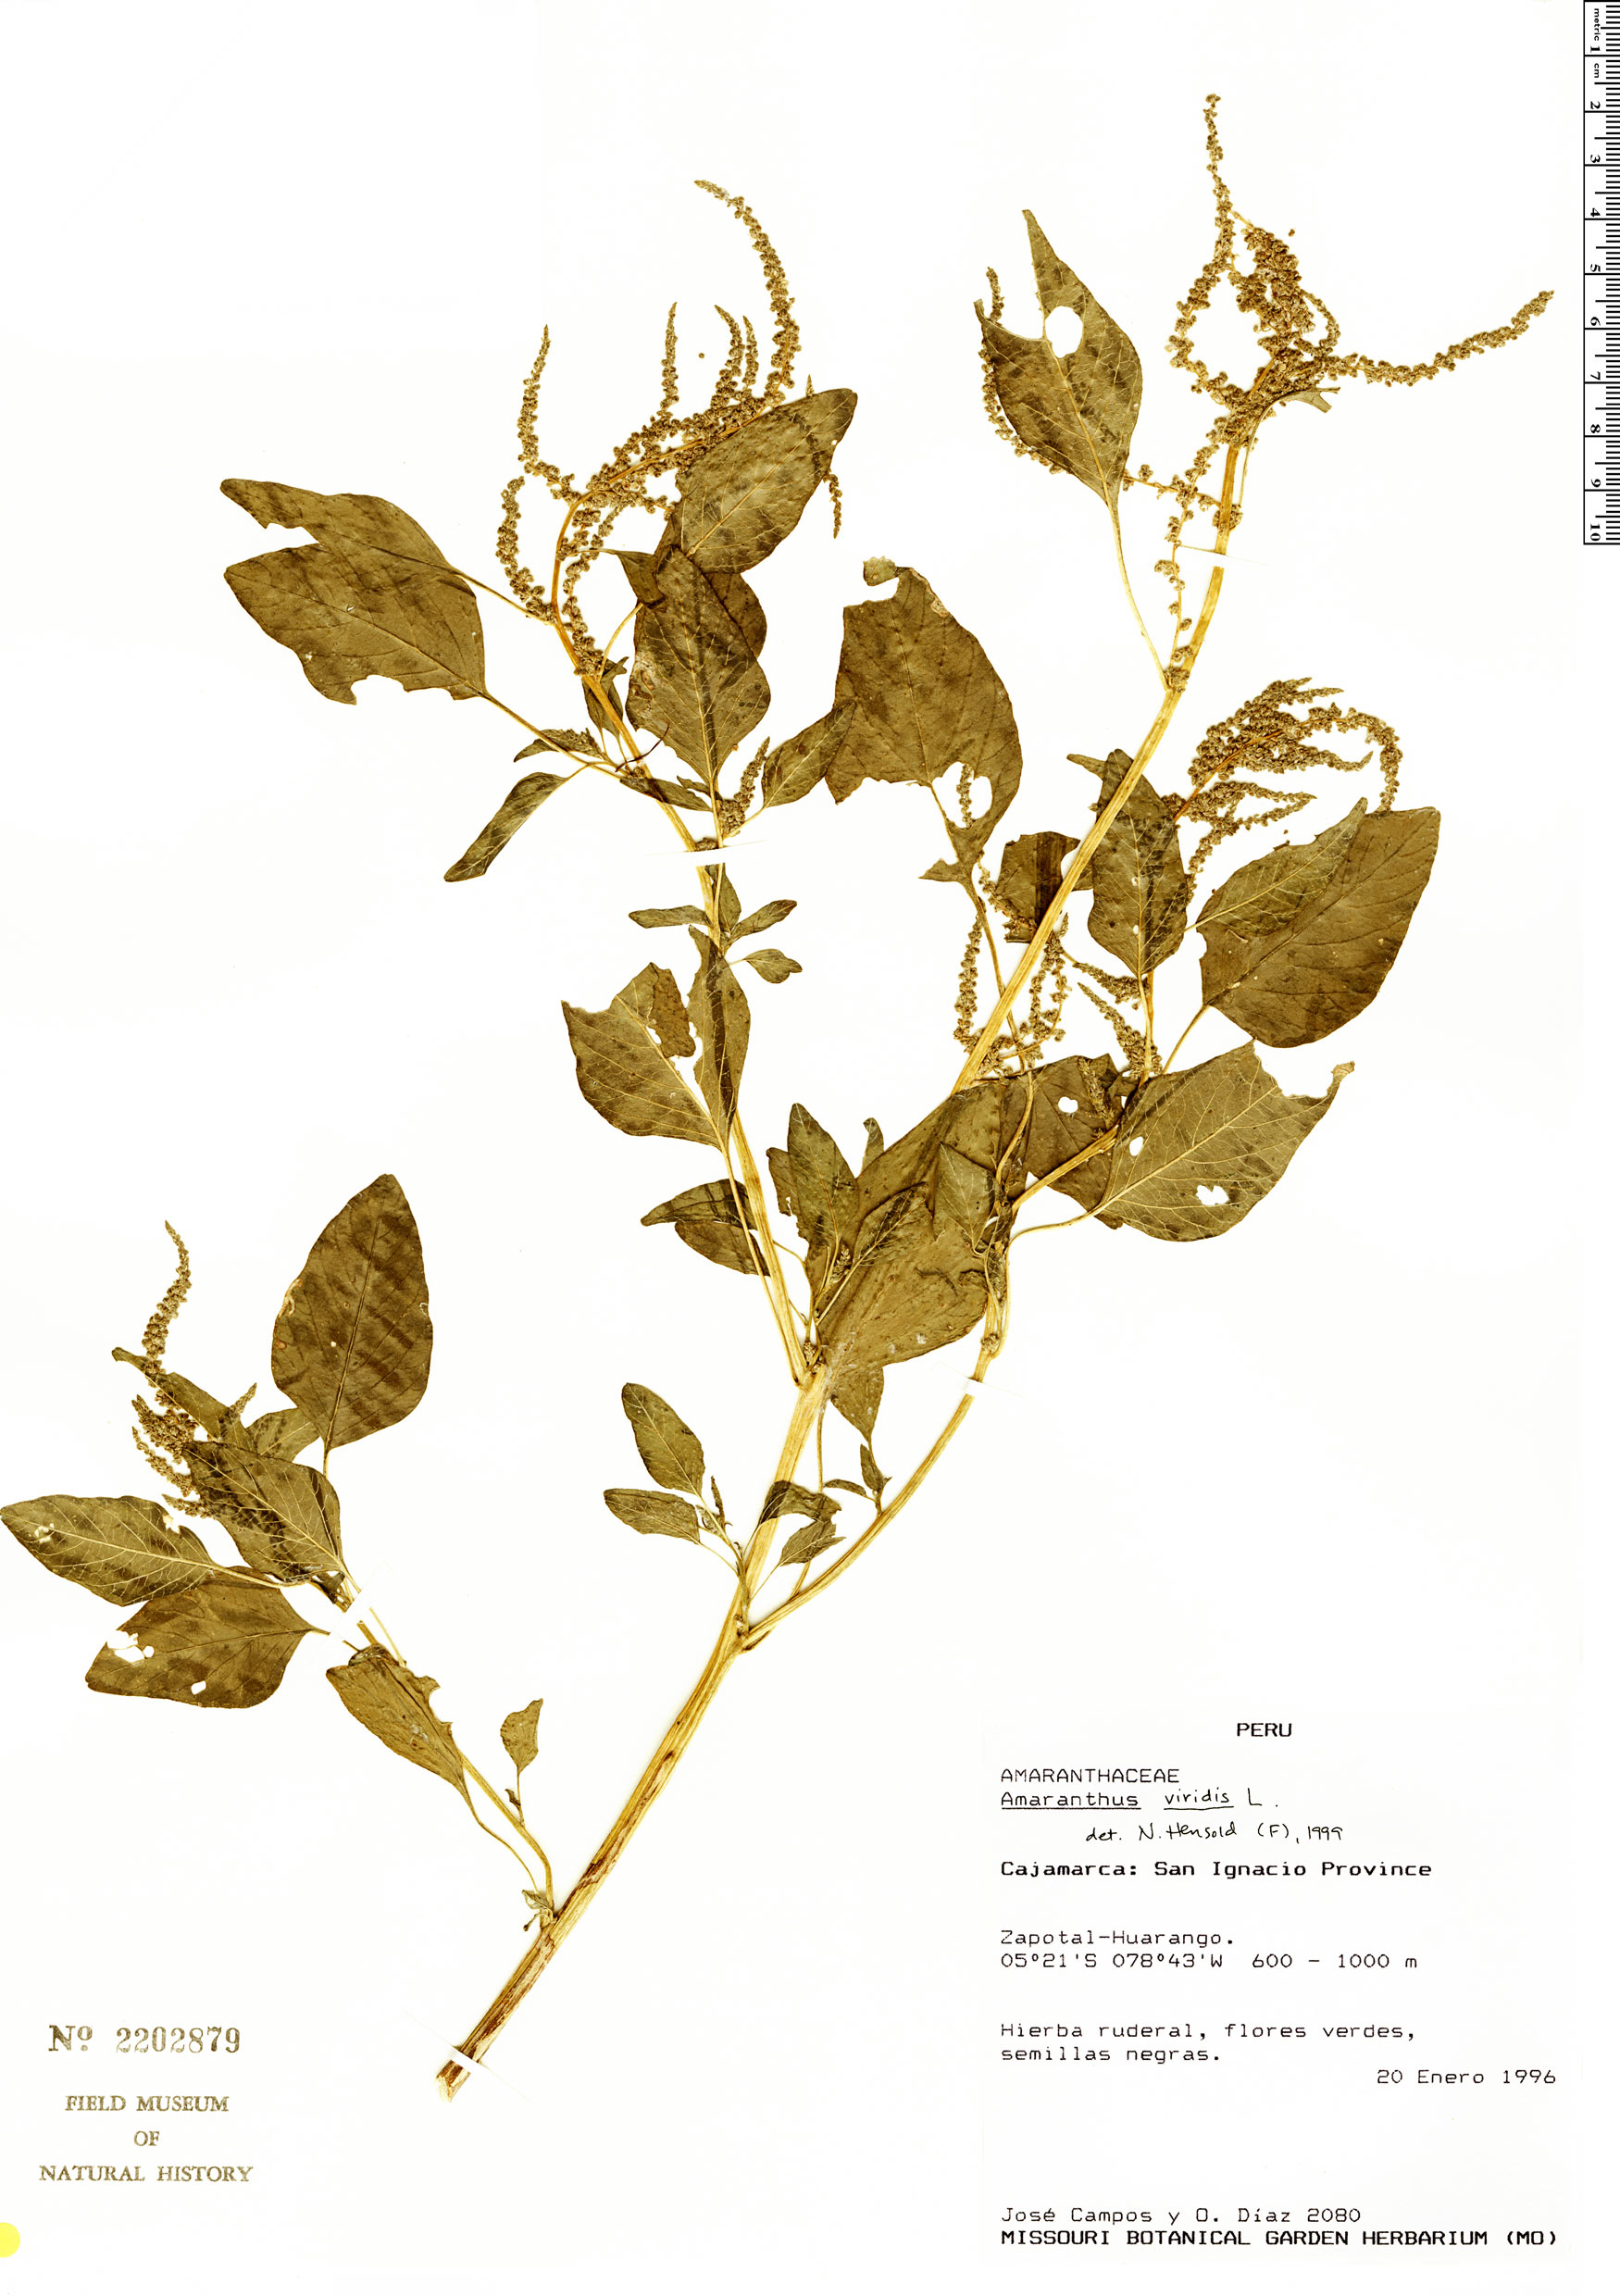 Amaranthus viridis | Rapid Reference | The Field Museum